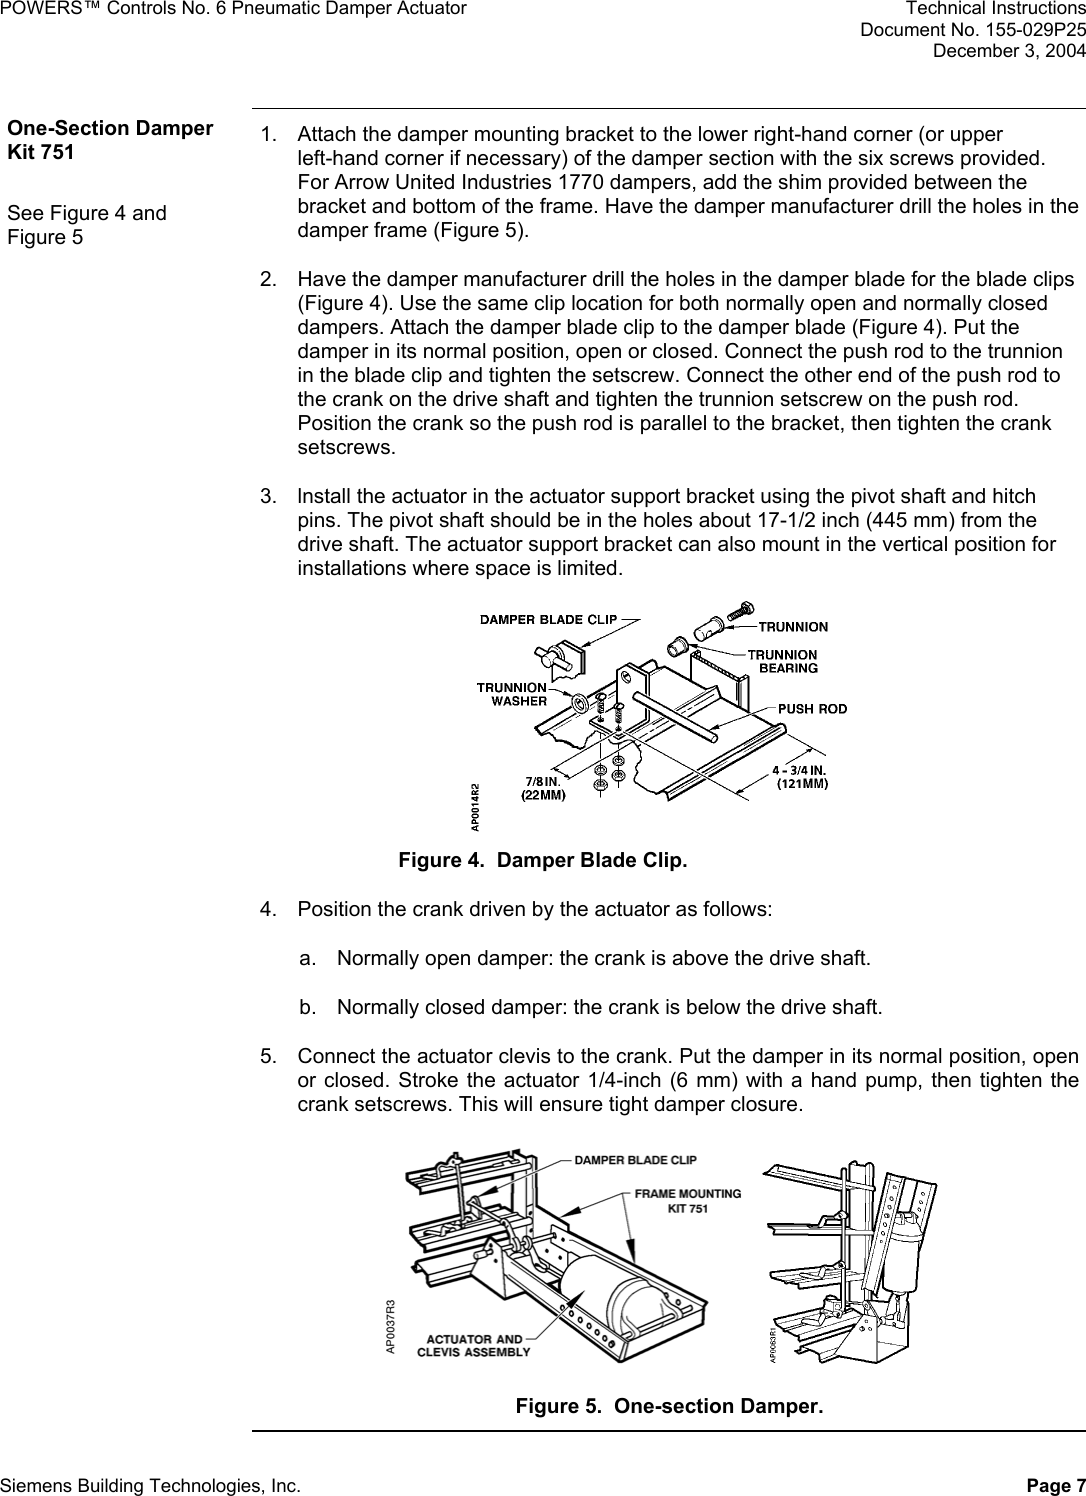 Page 7 of 12 - Siemens Siemens-331-2856-332-2856-Ap-331-3-Users-Manual- Powers Control - No. 6 Pneumatic Damper Actuator  Siemens-331-2856-332-2856-ap-331-3-users-manual